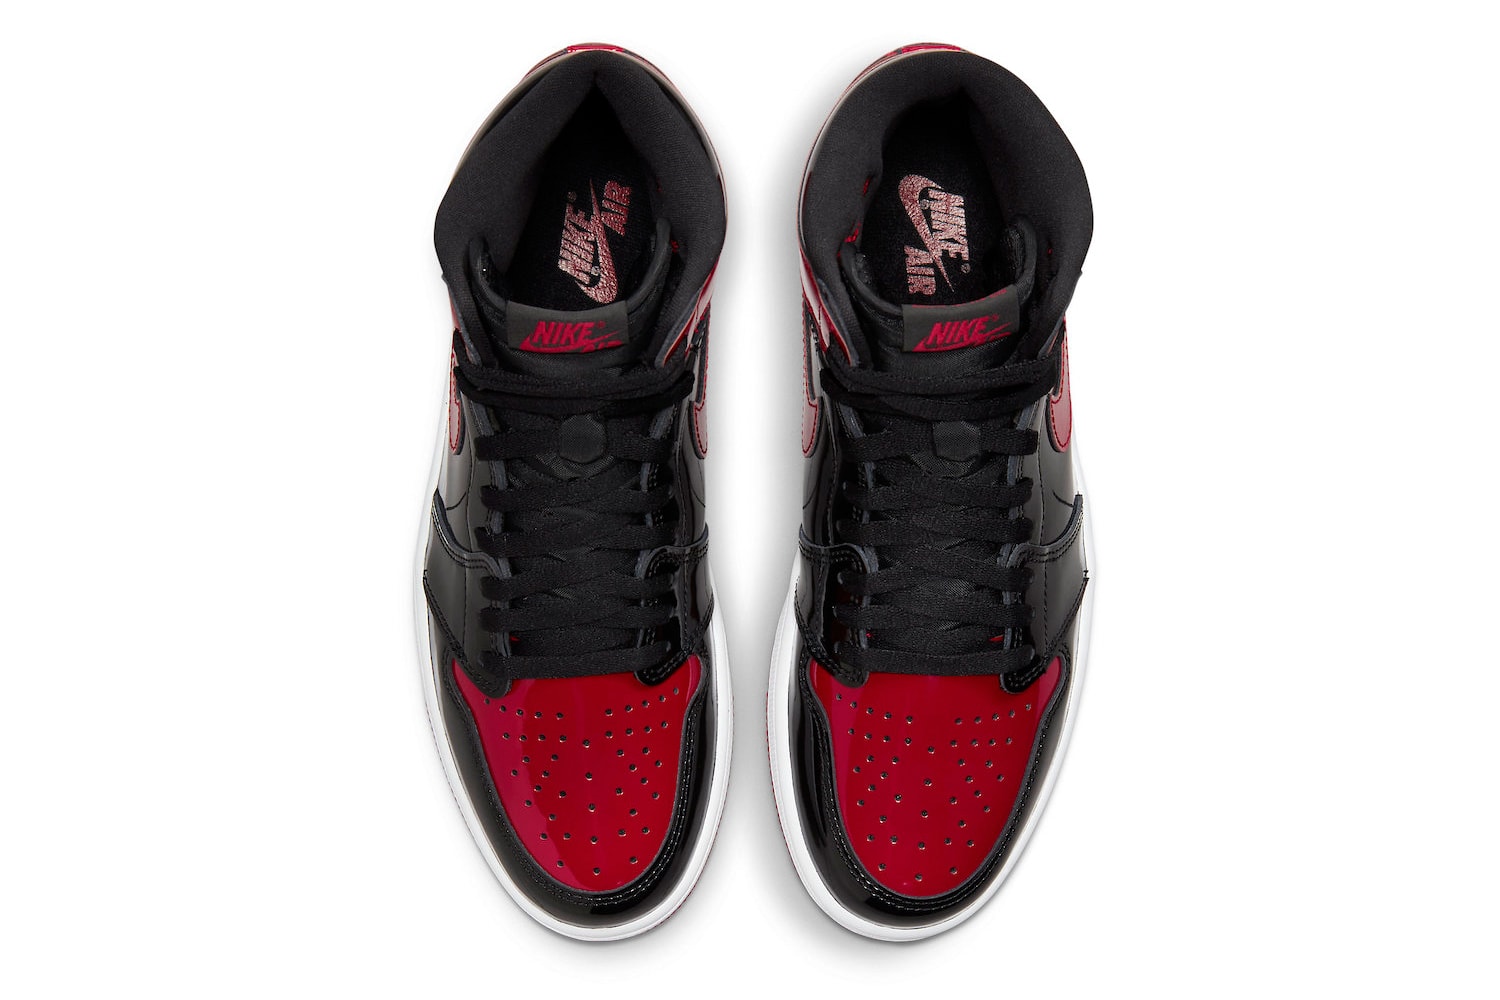 Air Jordan 1 High OG Bred Patent Official Look Release Info 555088-063 Date Buy Price Black White Varsity Red